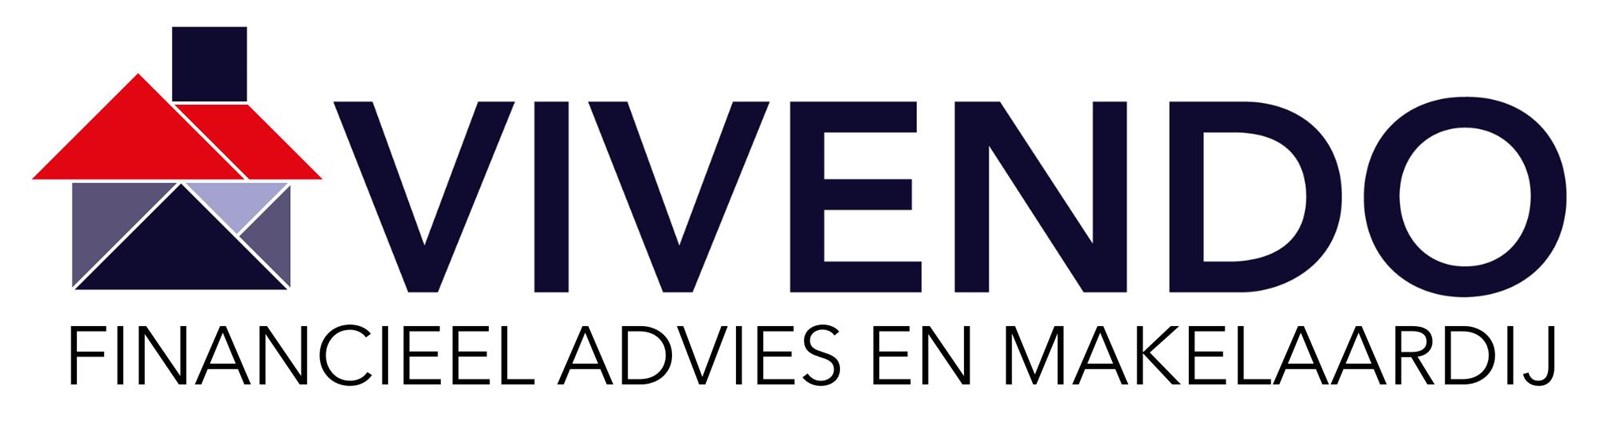 Logo van Vivendo Financieel Advies